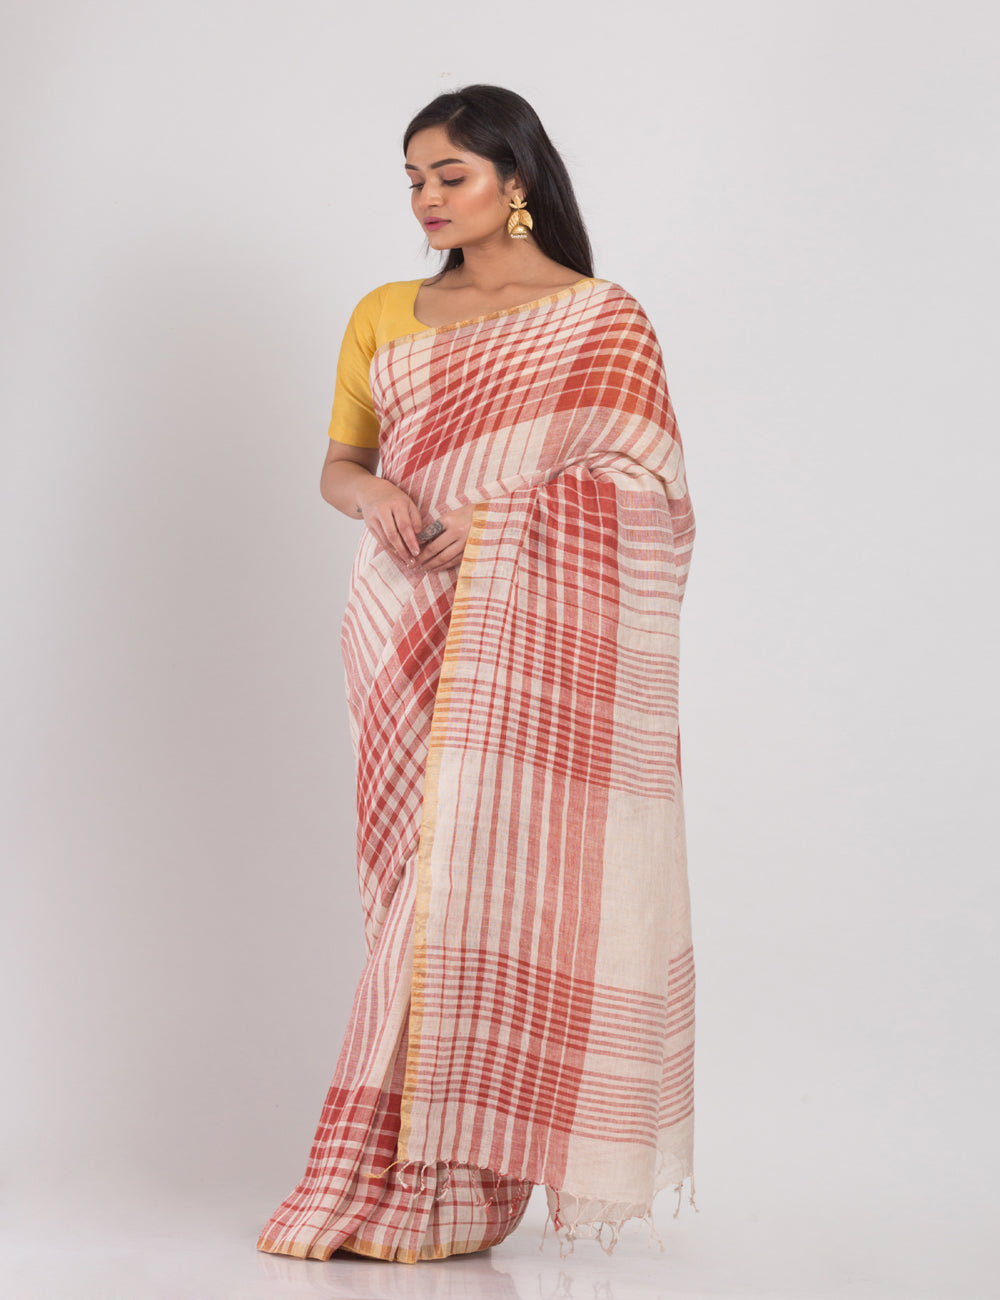 Multicolor white and red handwoven linen sari